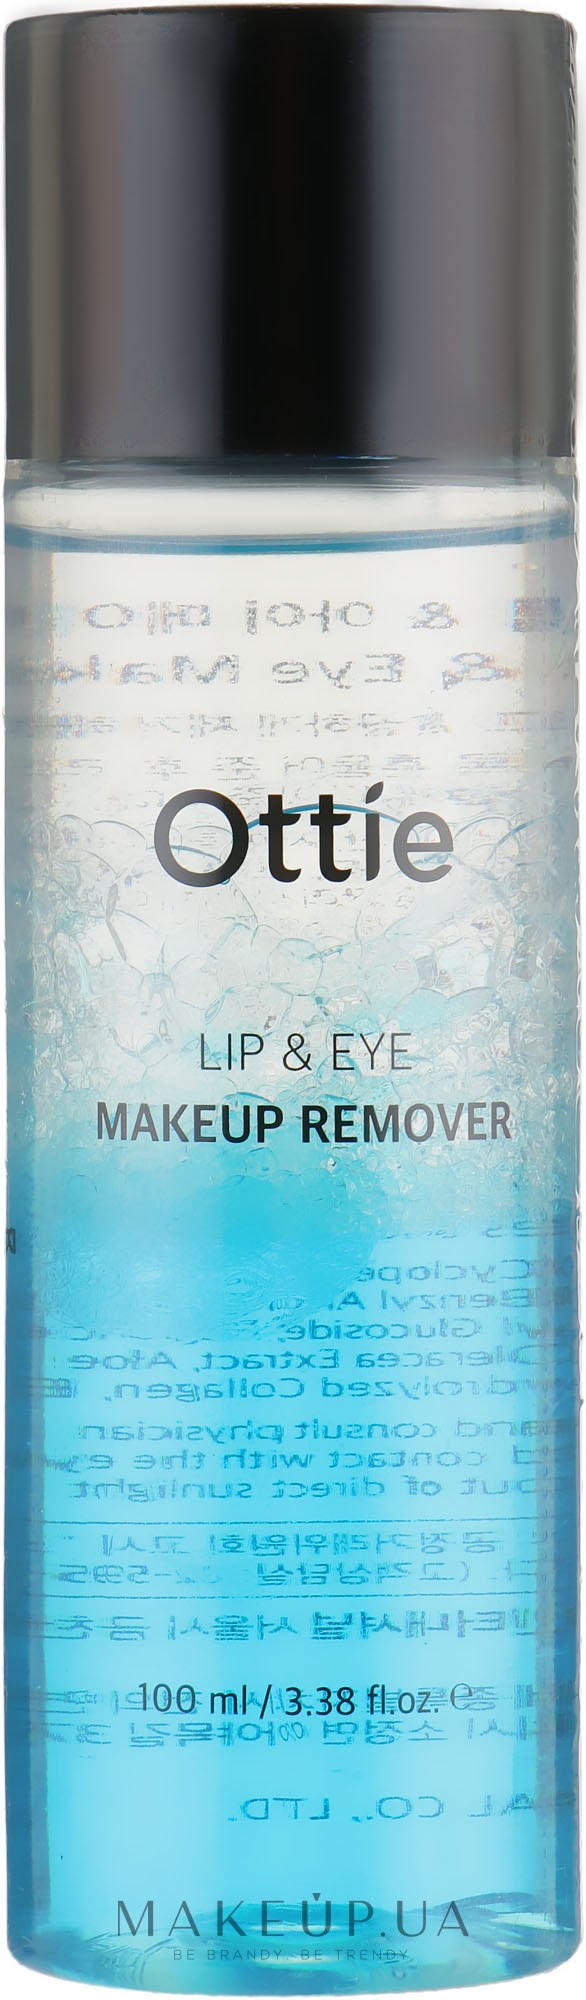 Ottie Lip & Eye Make-up Remover